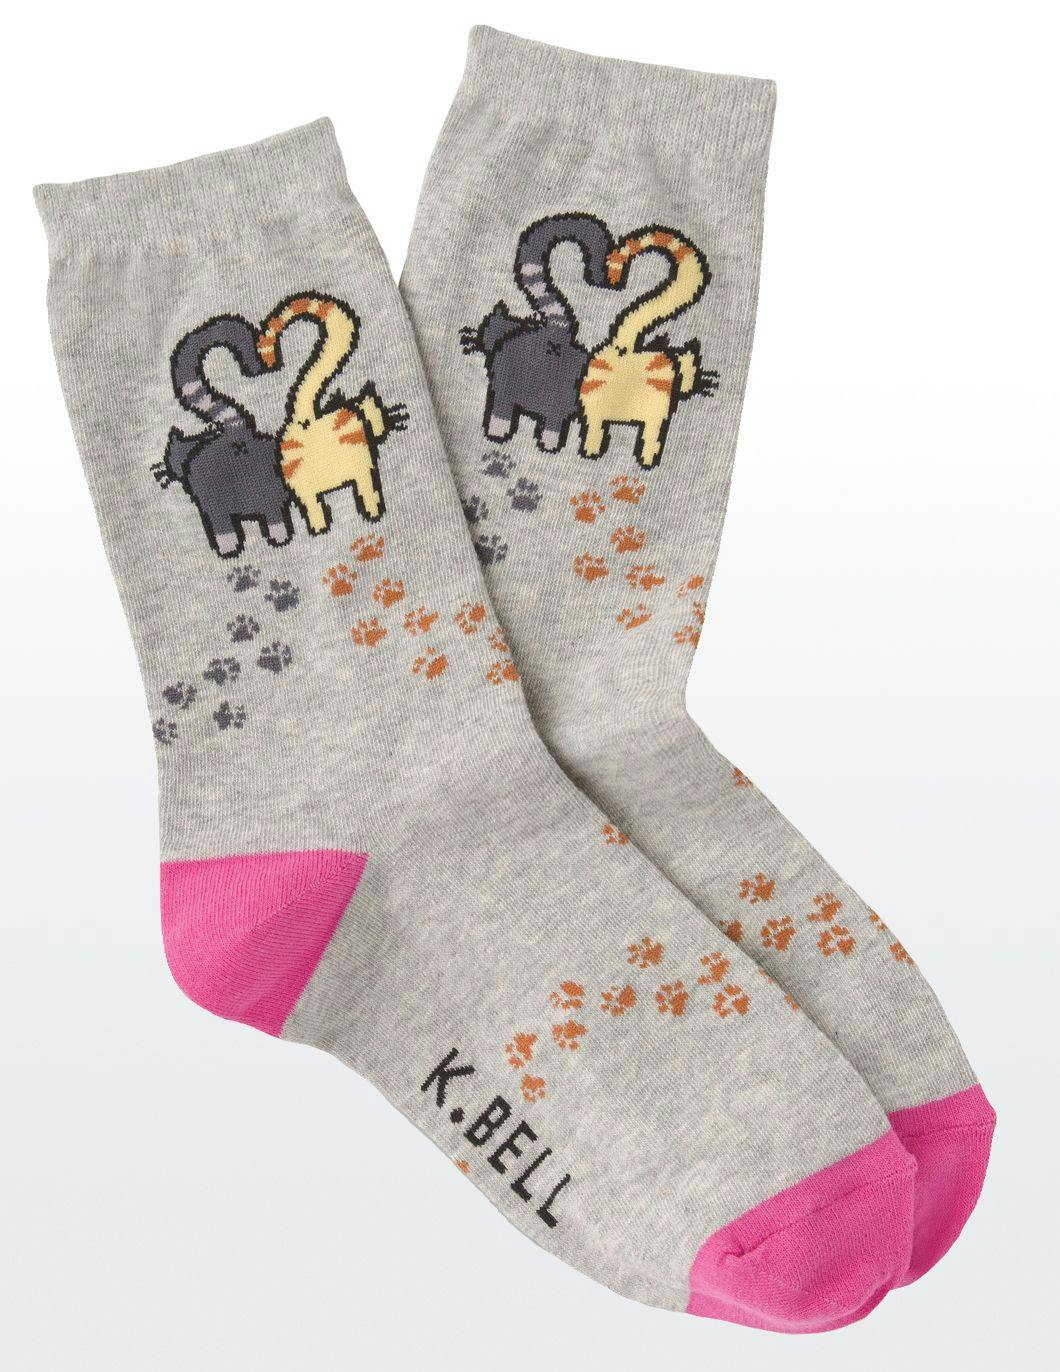 kbell-womens-cat-love-grey-heather-print-socks